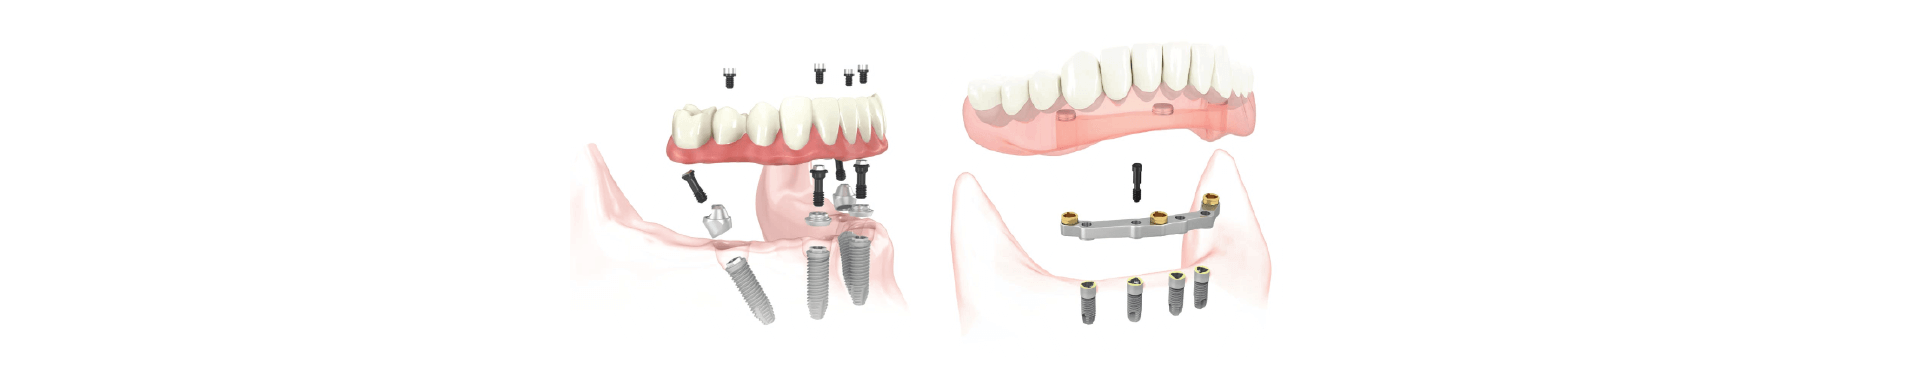  Carga inmediata - Clínica dental Dr. Ferrer | Madrid